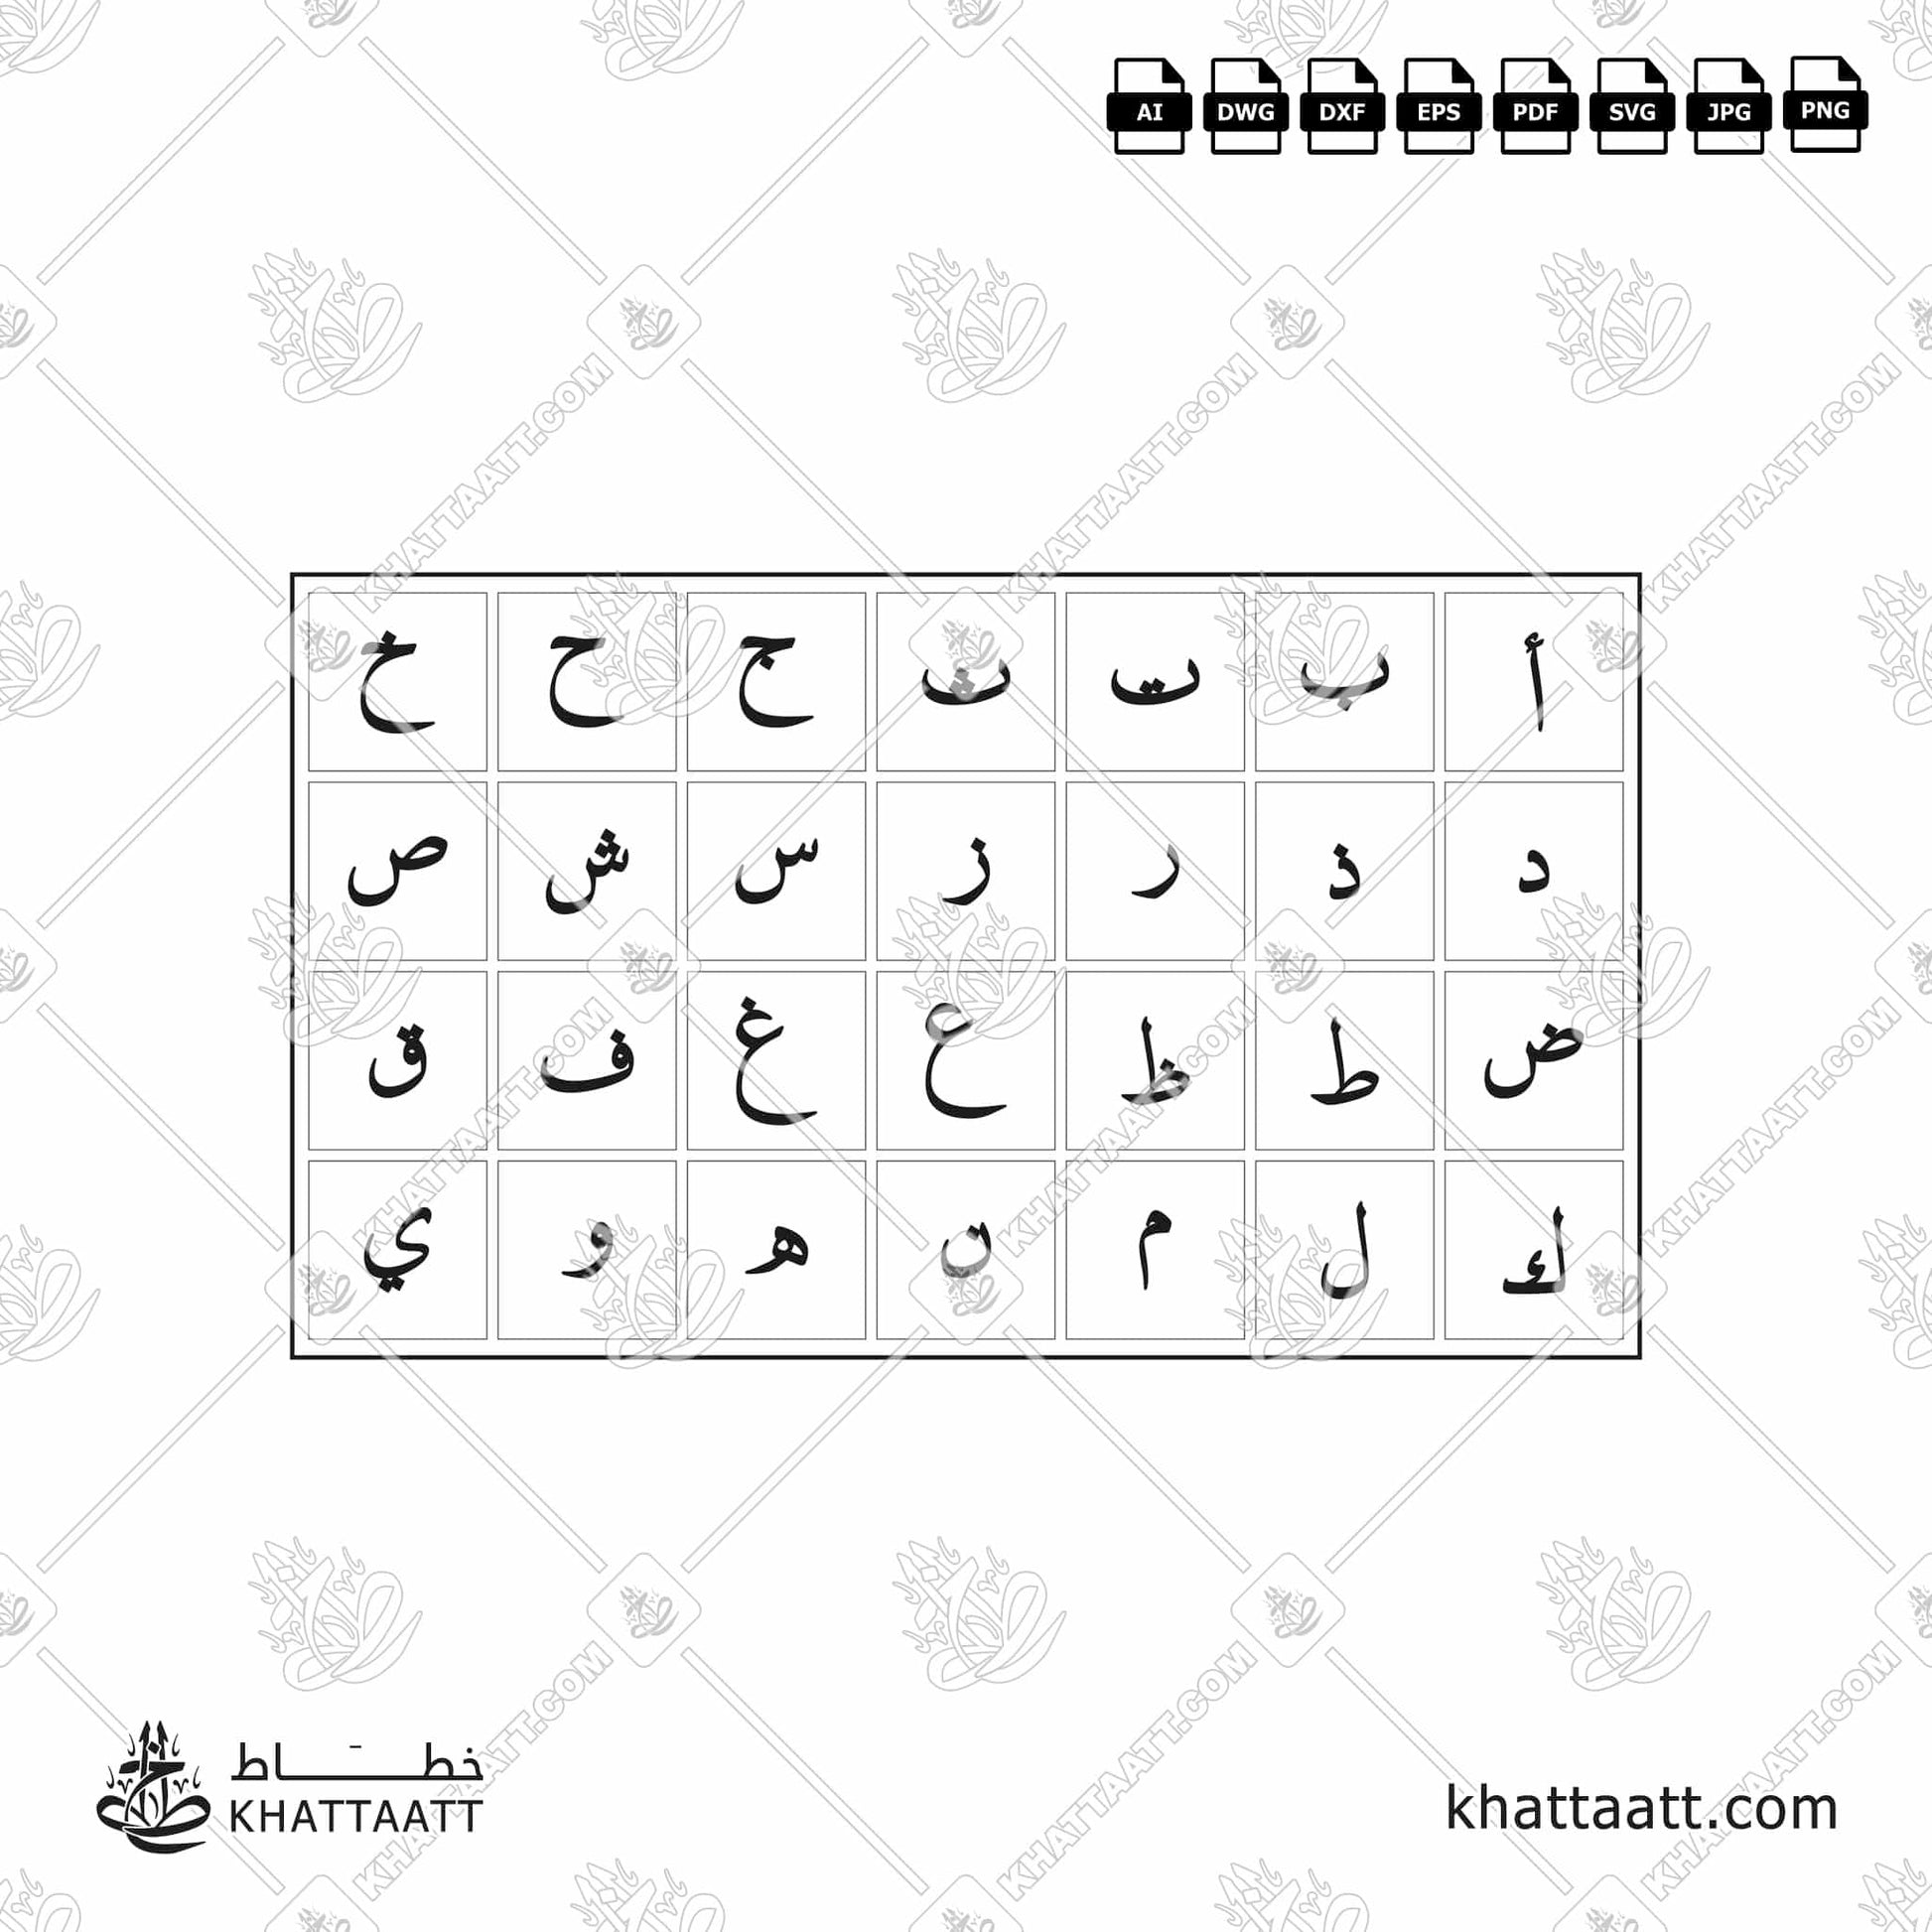 Download Arabic calligraphy تحميل مخطوطة خط عربي of Arabic Alphabet - الأبجدية العربية (N011) Naskh - خط النسخ in vector فيكتور and png